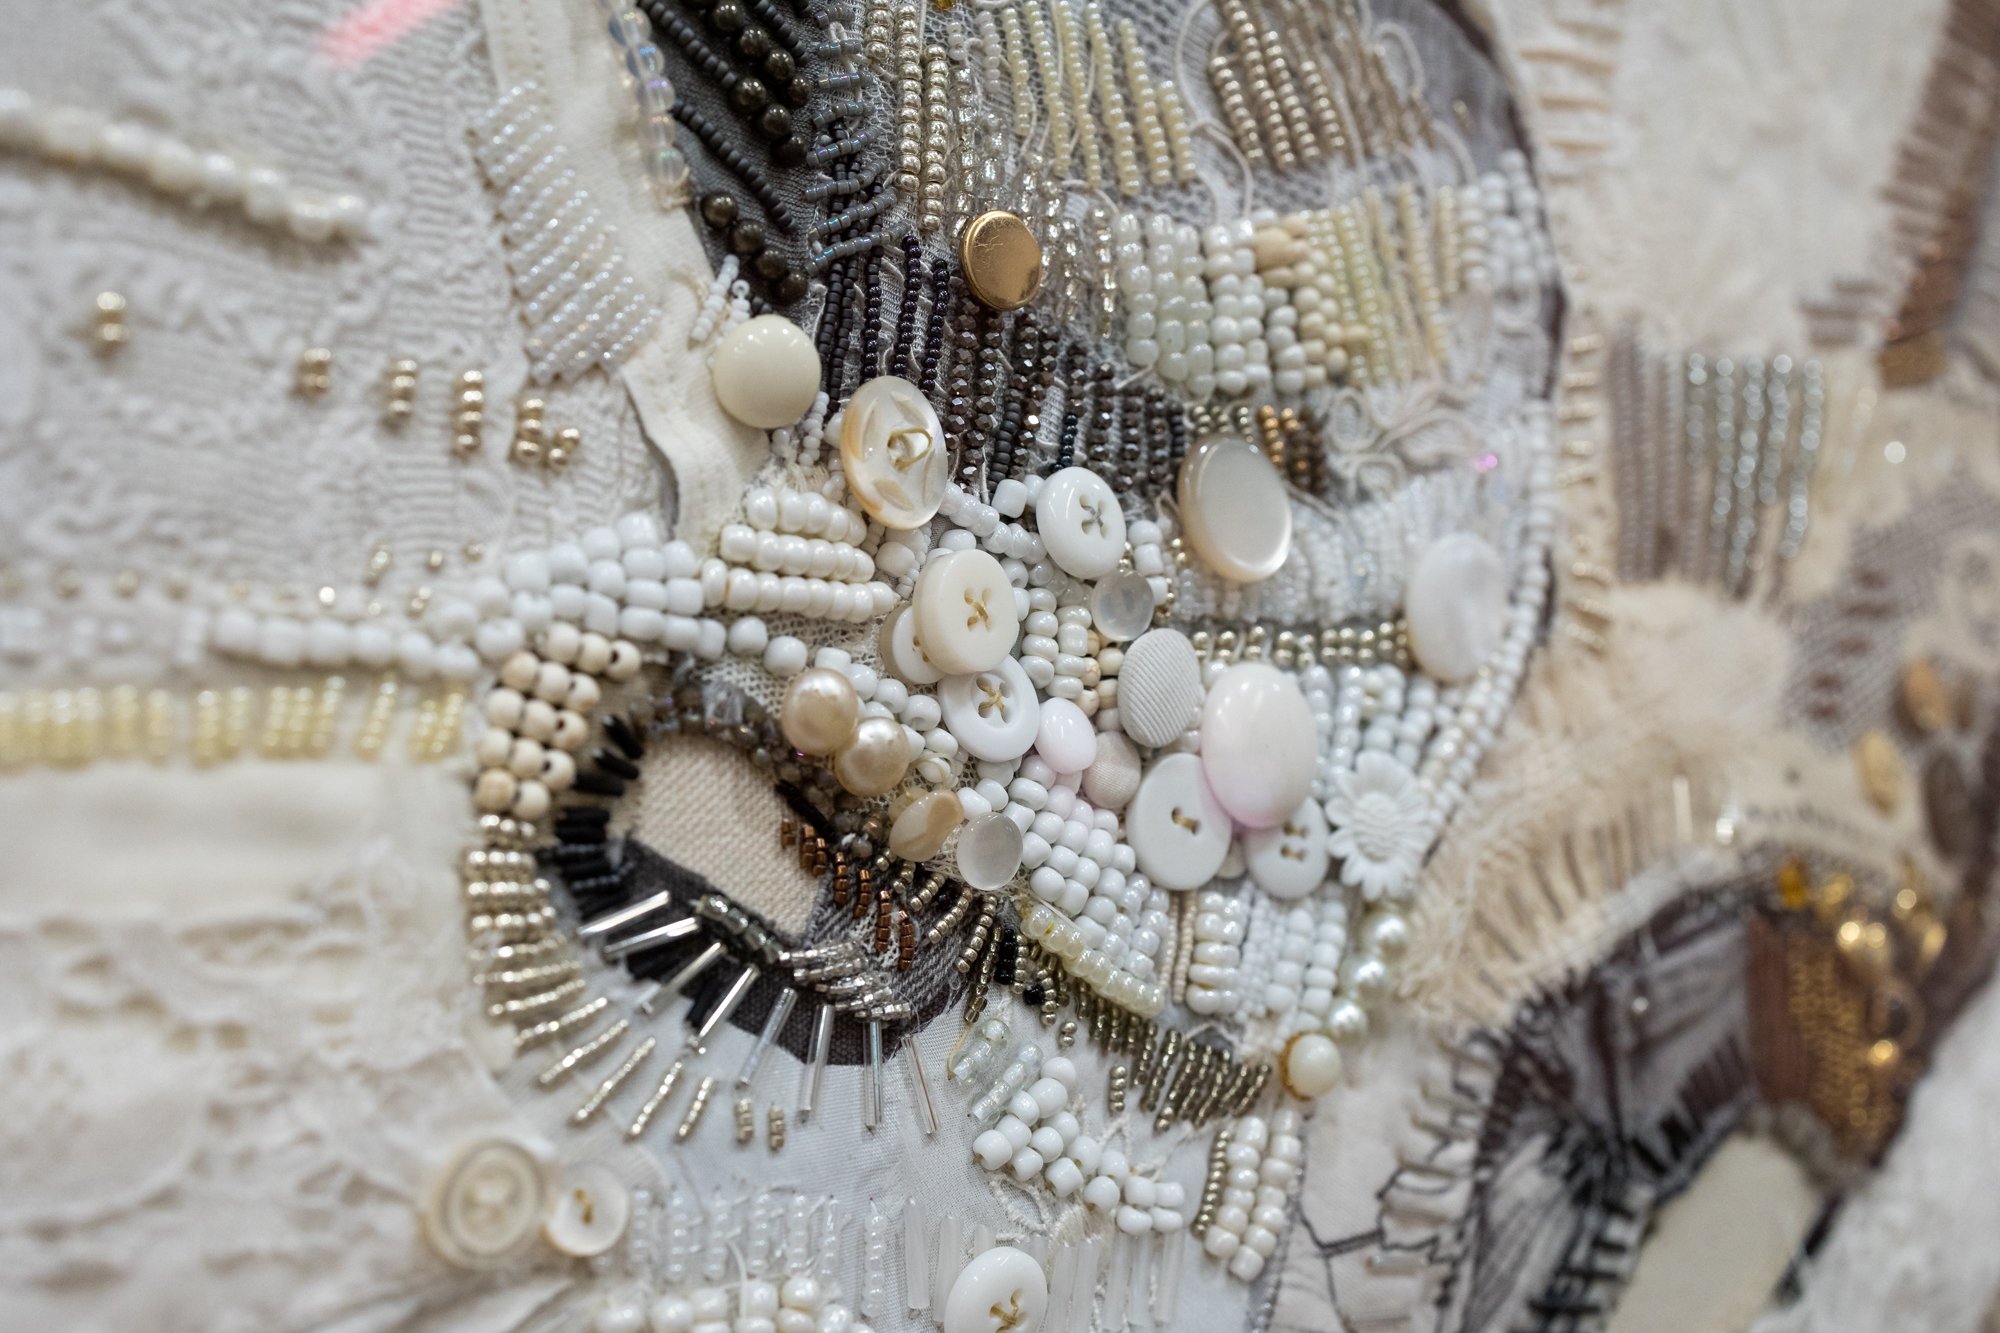 "Anatomy of a Wedding Dress" Mixed Media Textile Artwork by Mary Lacy @ Soapbox Arts Gallery, Burlington, Vermont